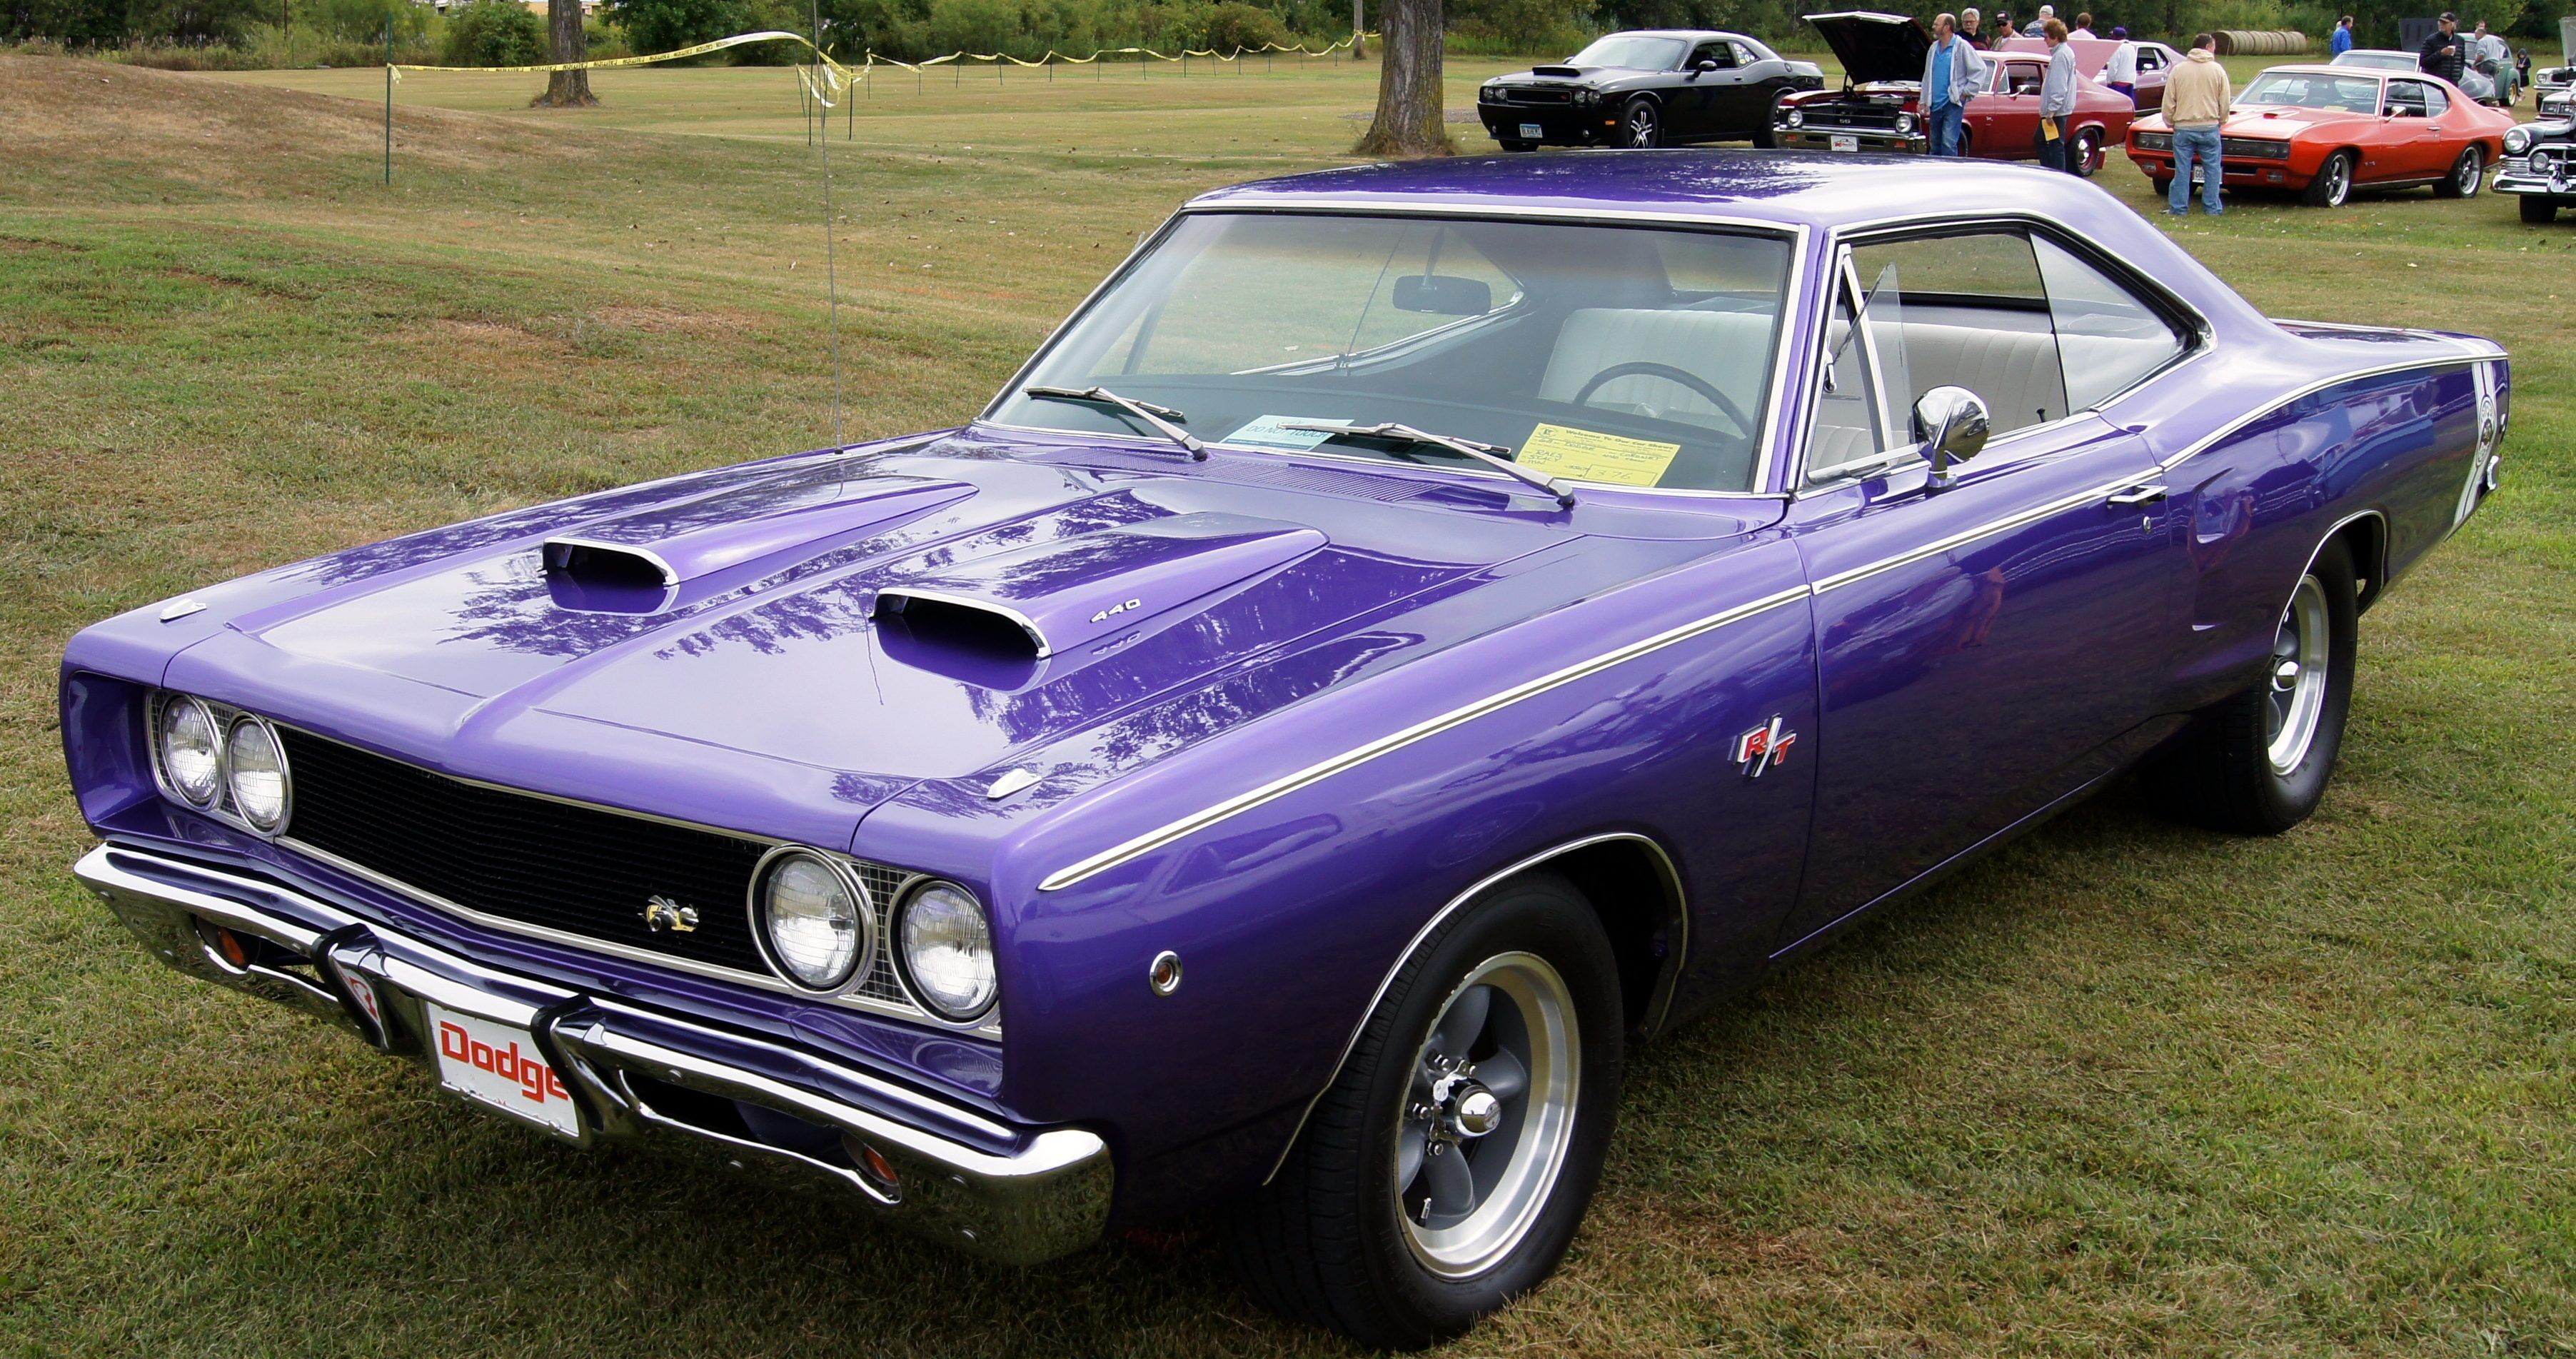 Dodge Coronet in purple.